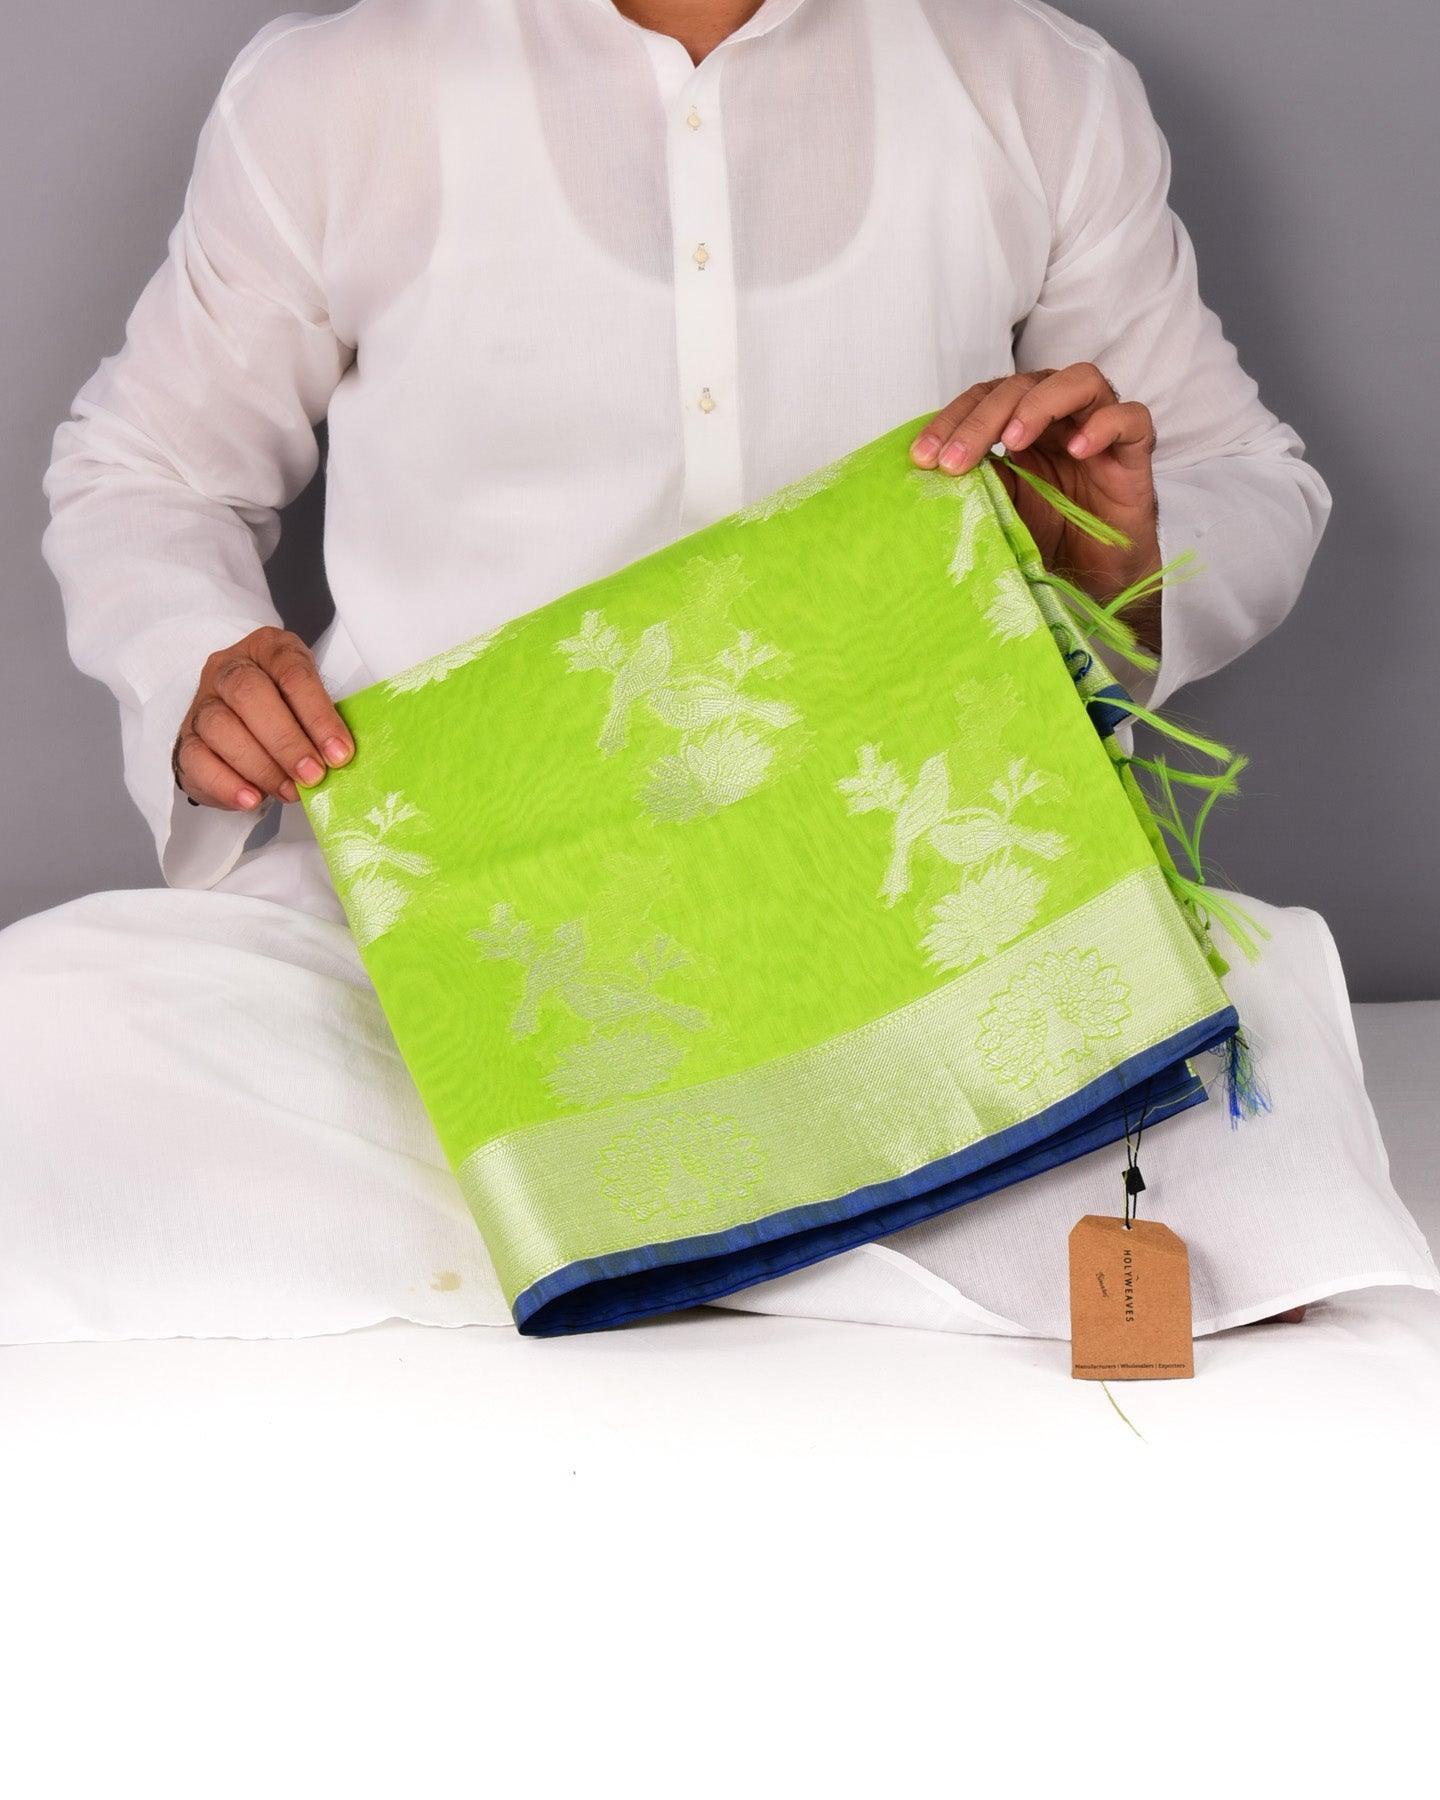 Neon Green Banarasi Silver Zari Lovebirds Cutwork Brocade Woven Art Cotton Silk Saree - By HolyWeaves, Benares